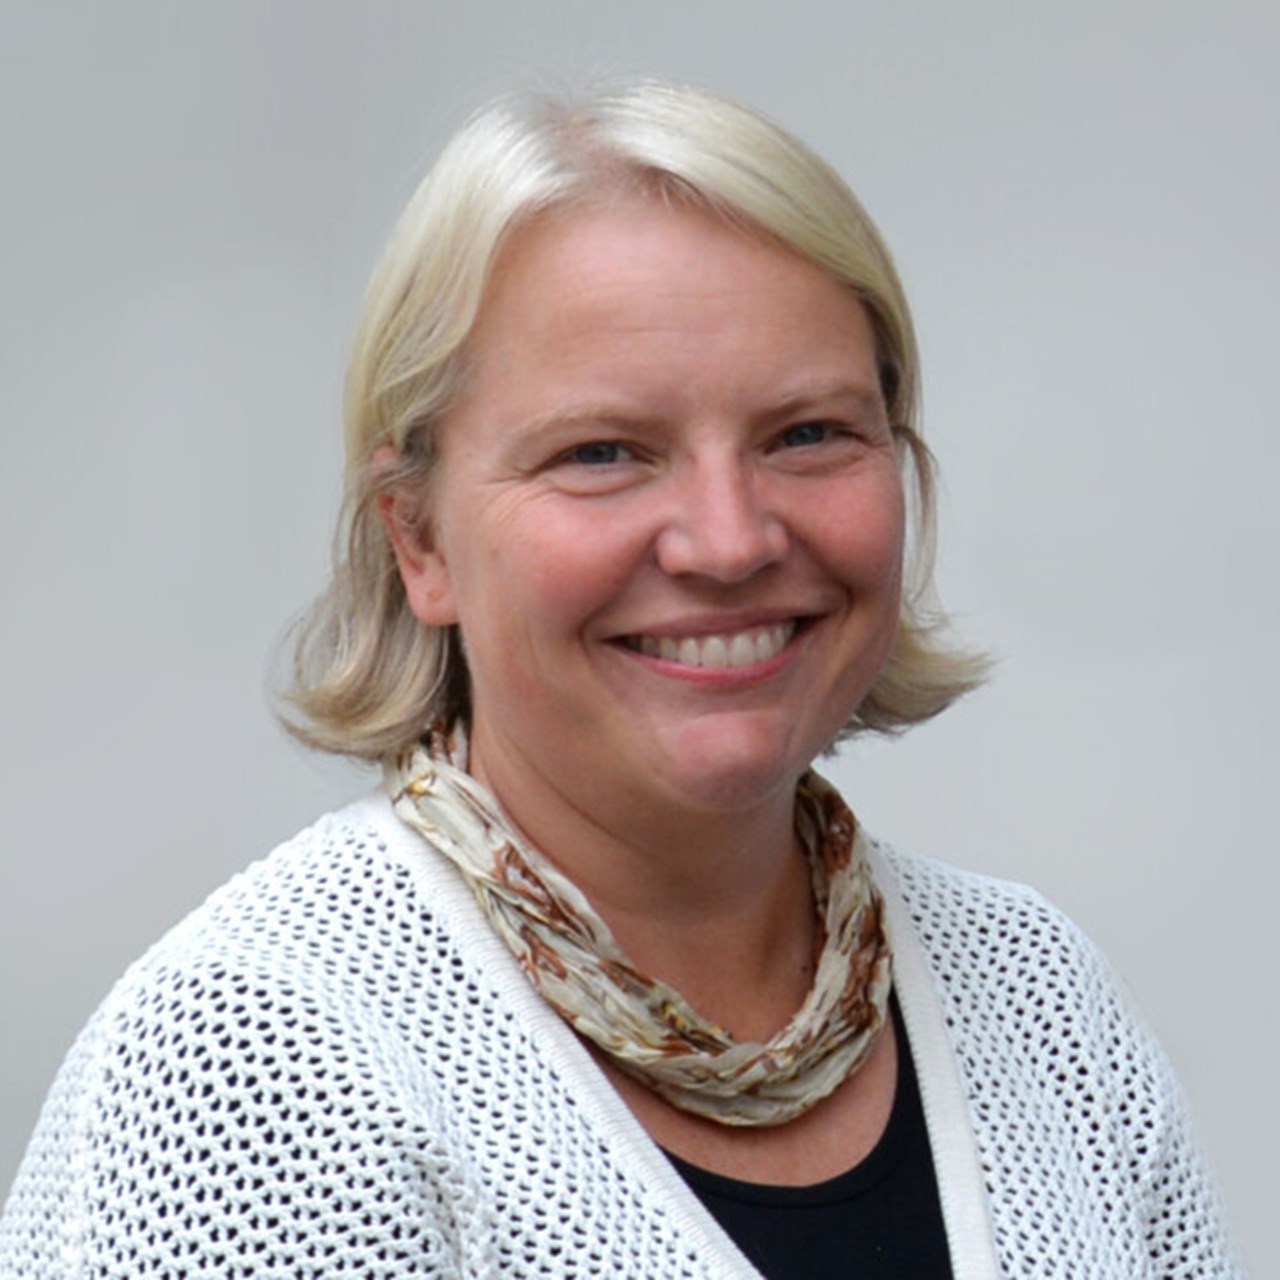 Maria Nordin, Department of Psychology